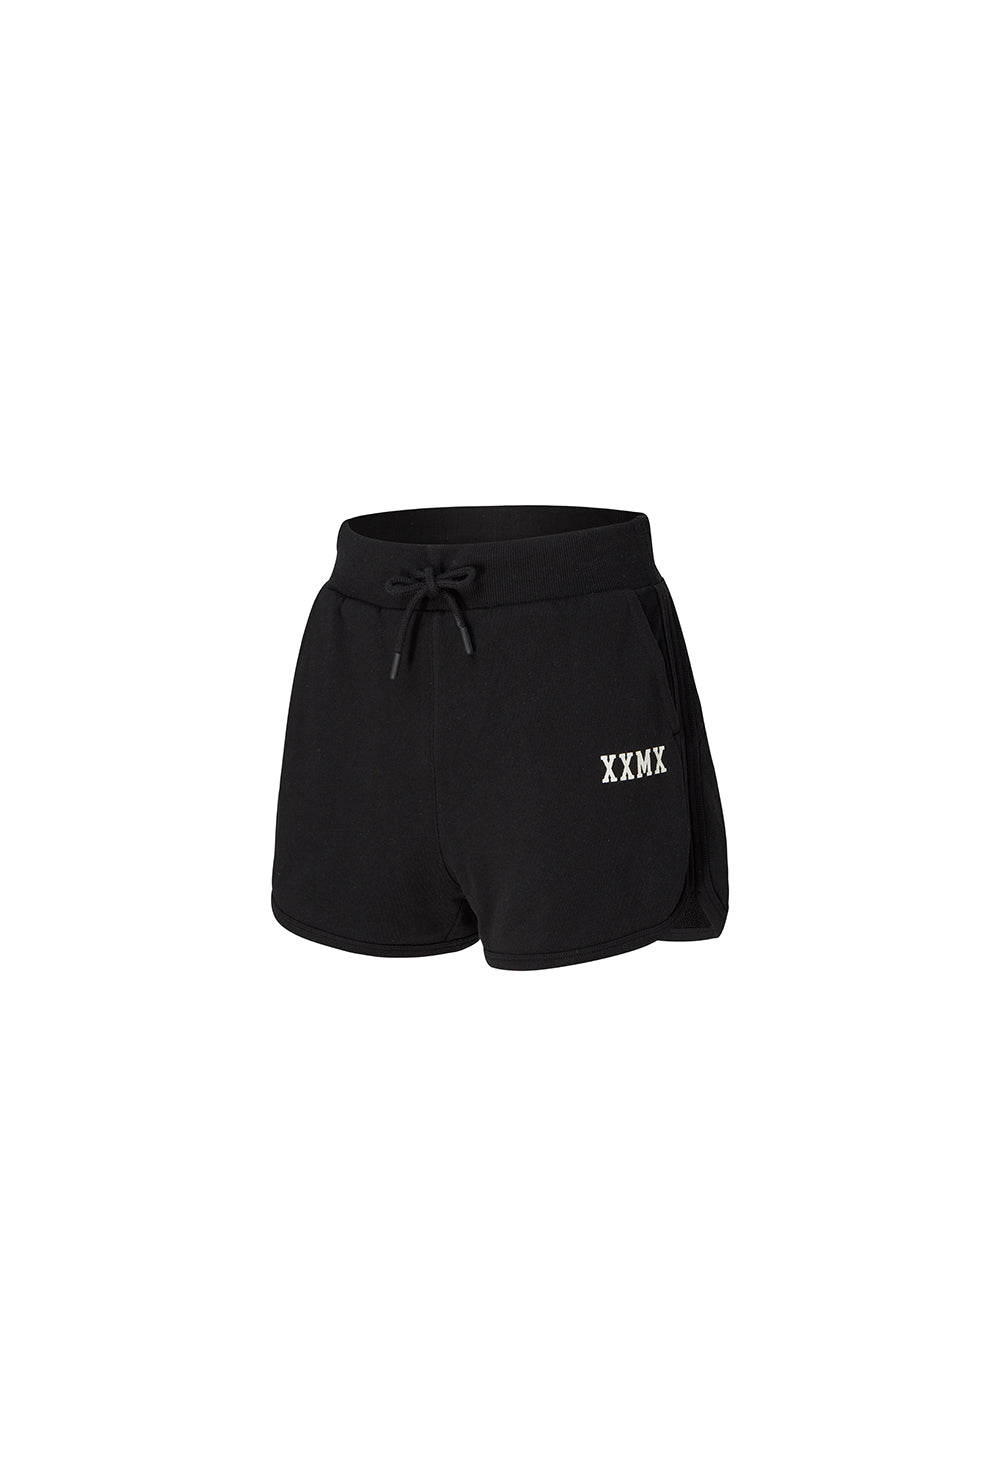 XXMX Daily Cotton Shorts - Black